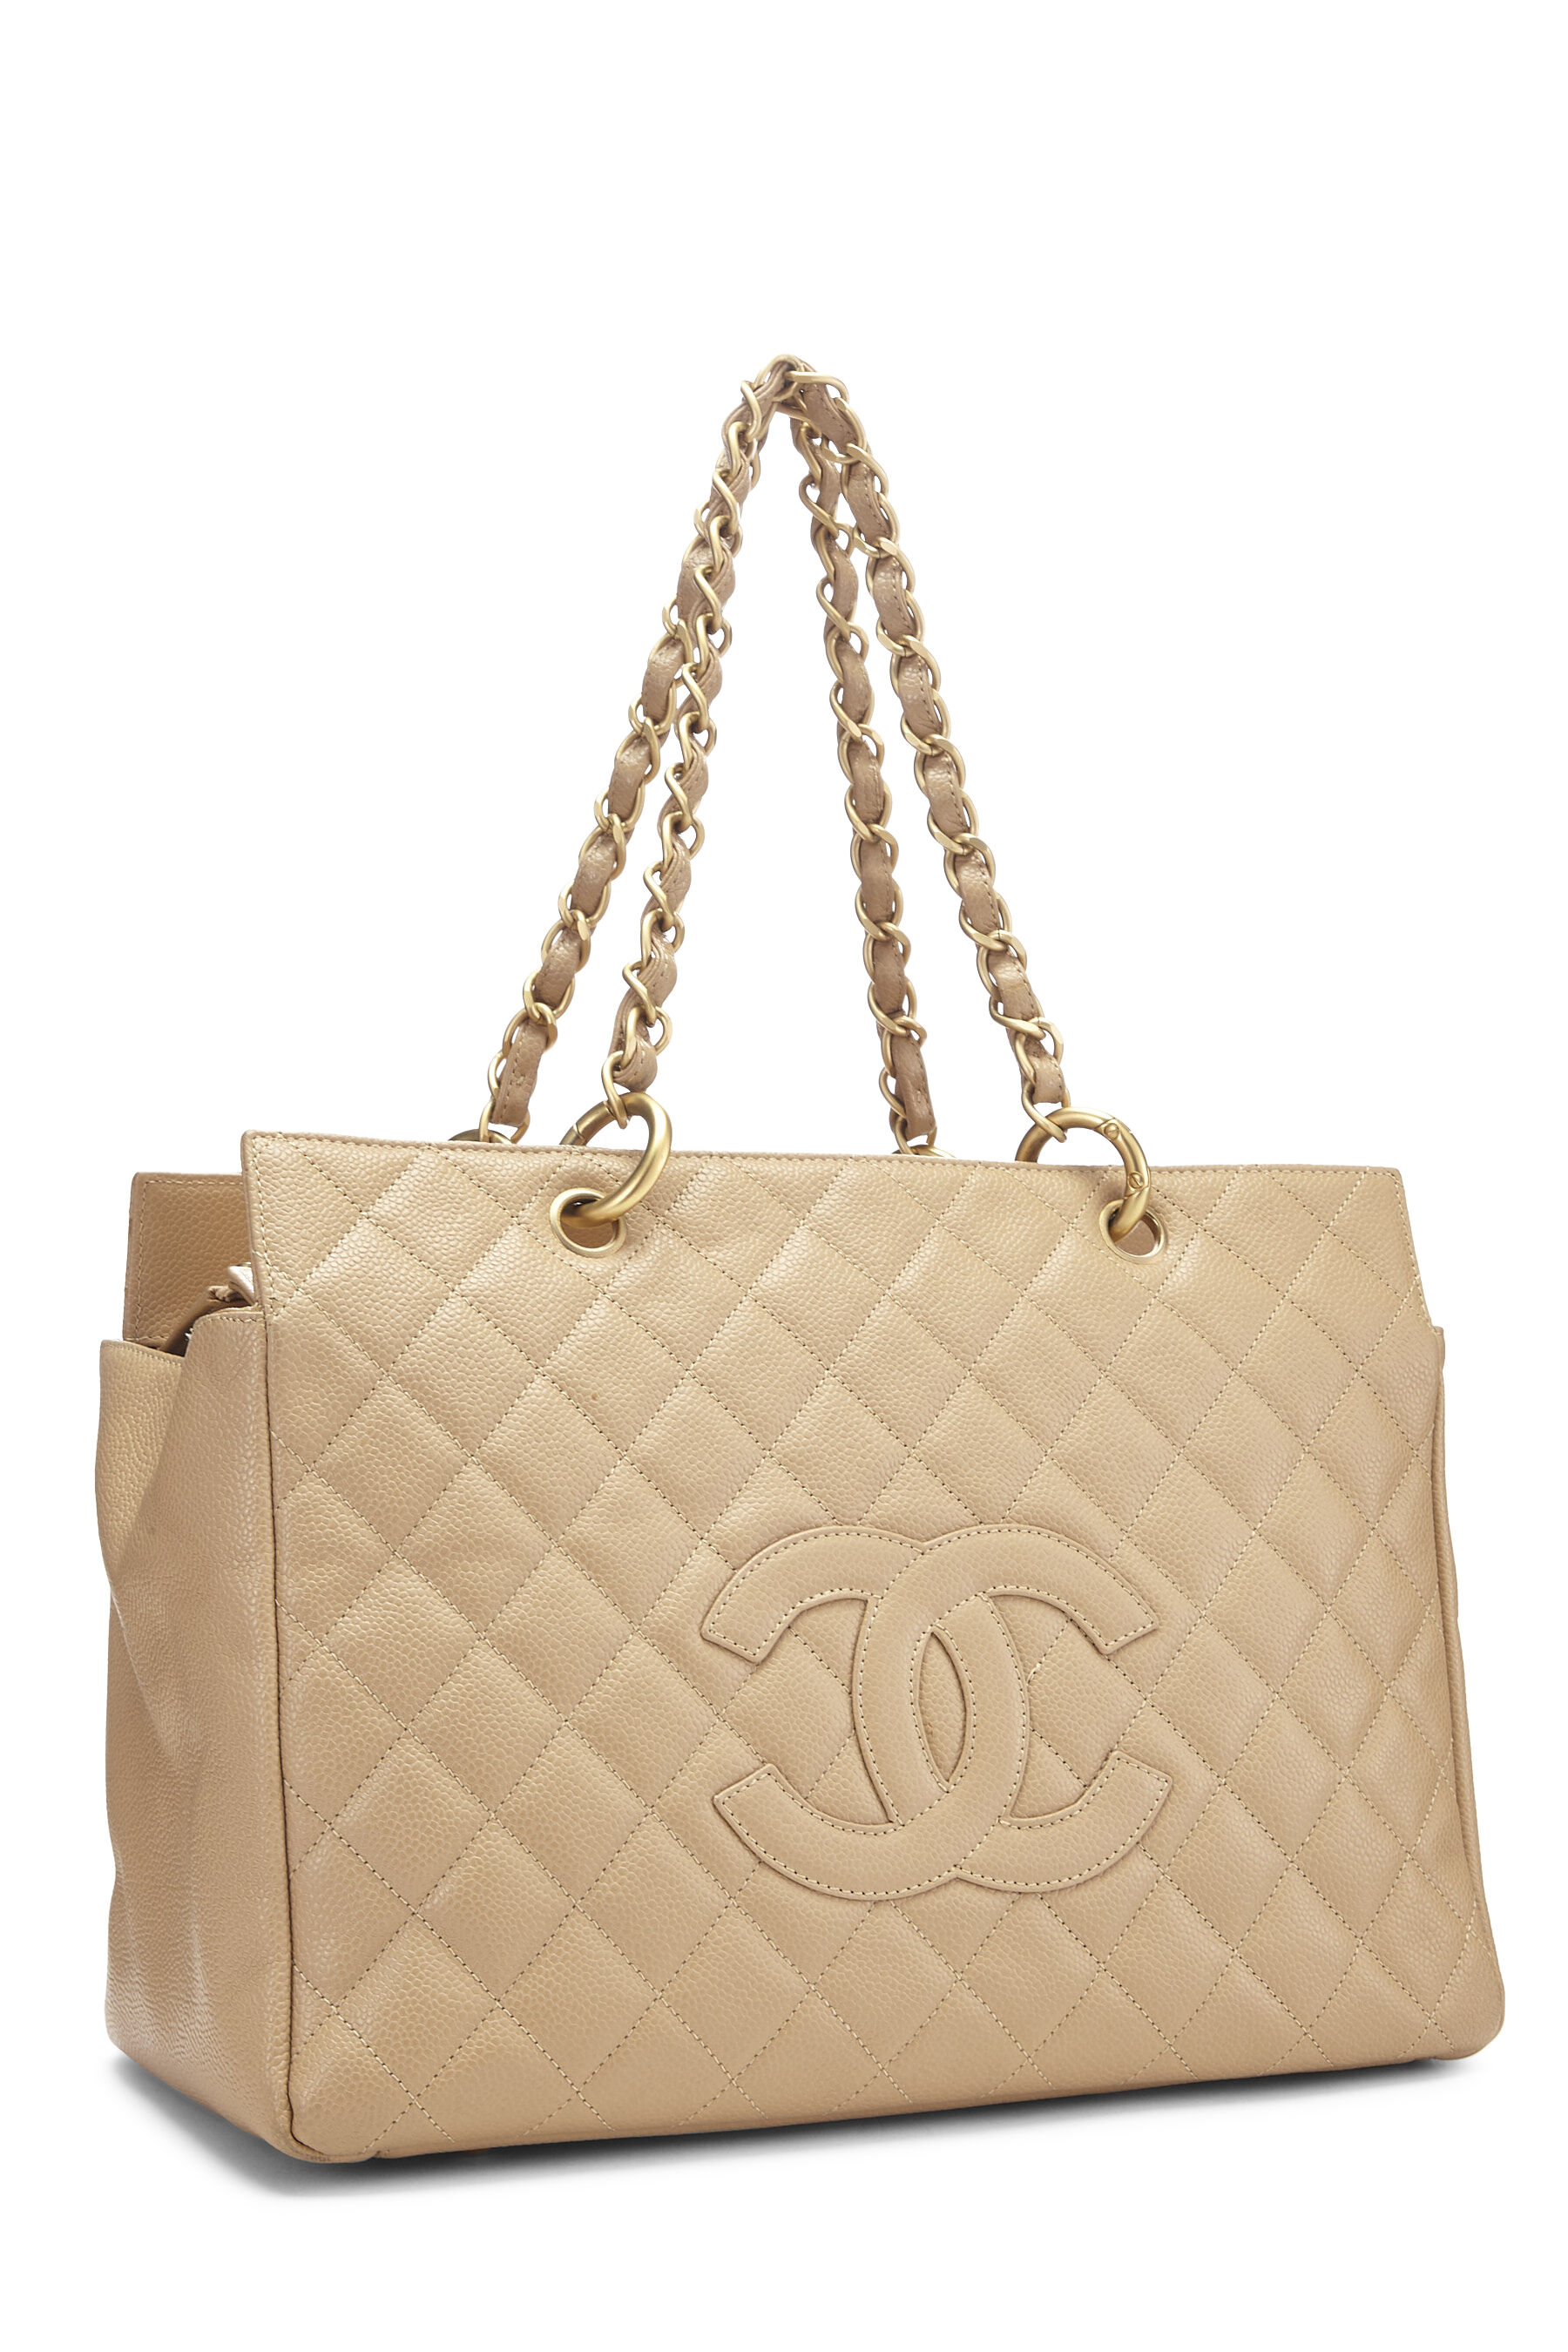 CHANEL Caviar Beige Bags & Handbags for Women for sale